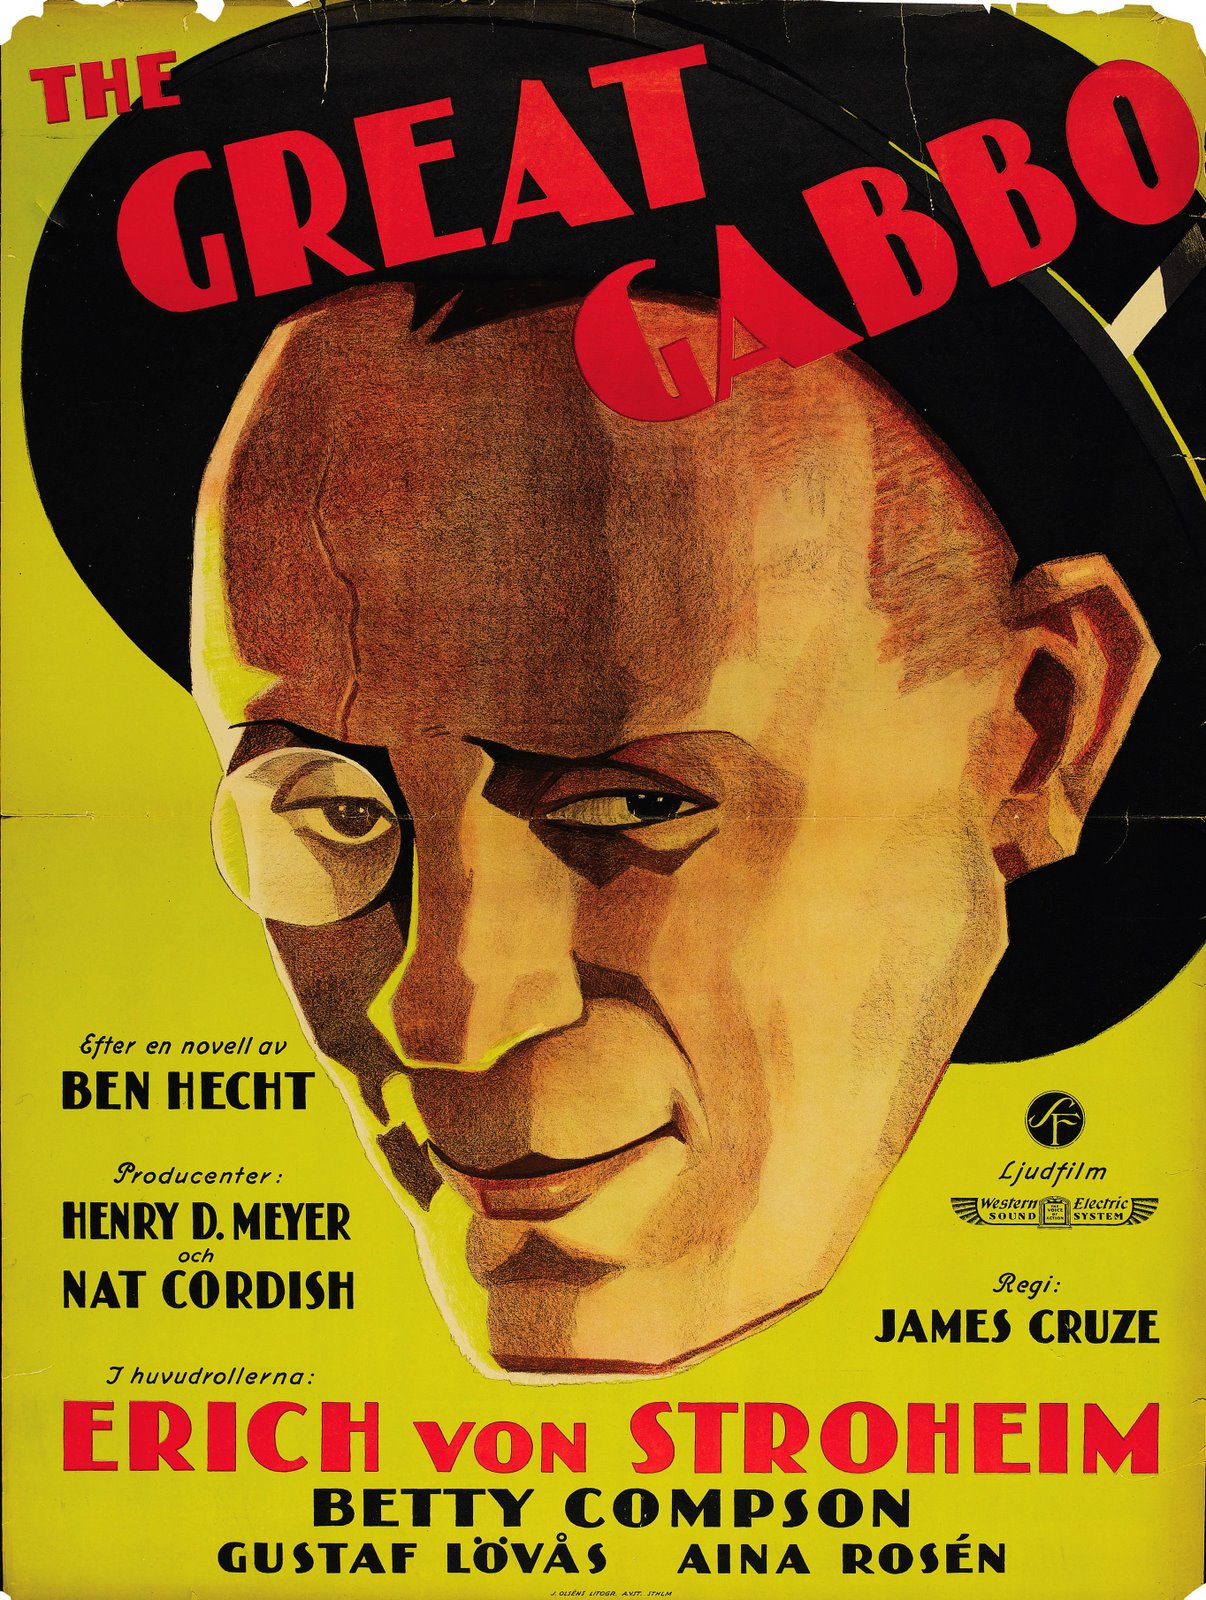 [GREAT+GABBO+1929.jpg]